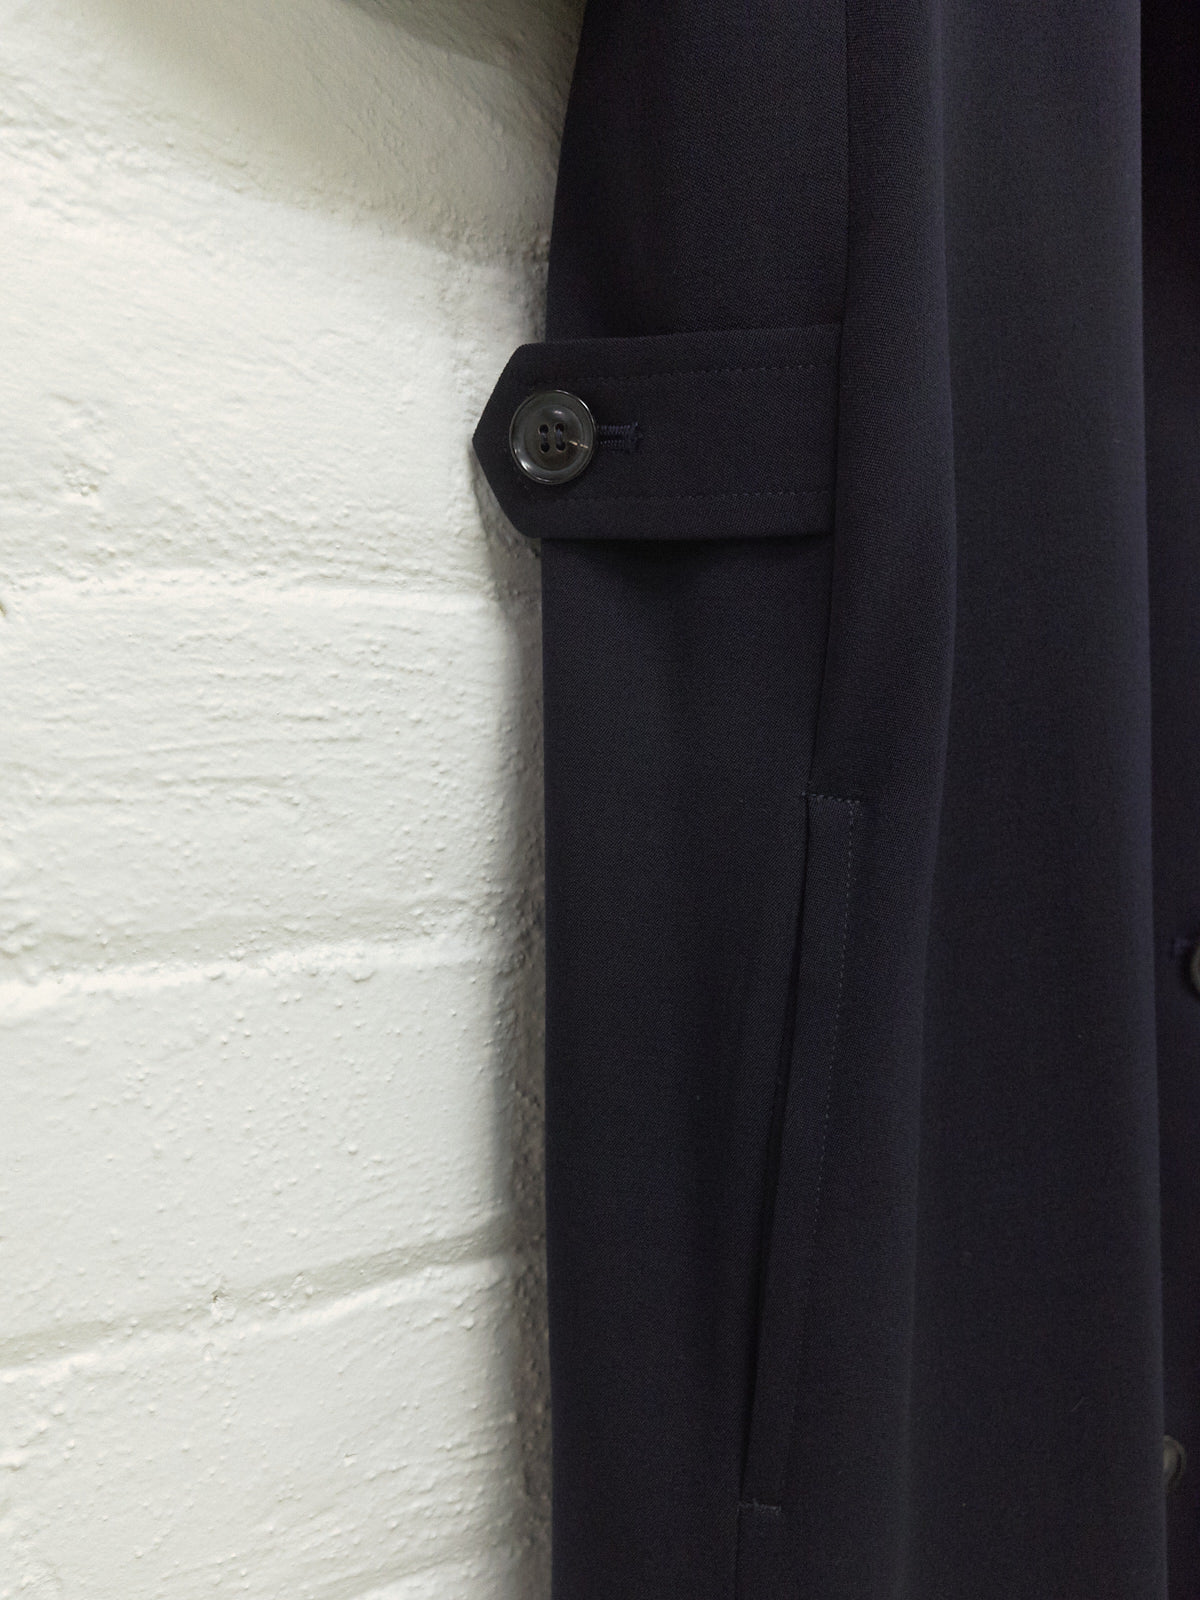 Y's Yohji Yamamoto 1990s dark navy wool 3 button side tab coat - womens S M L